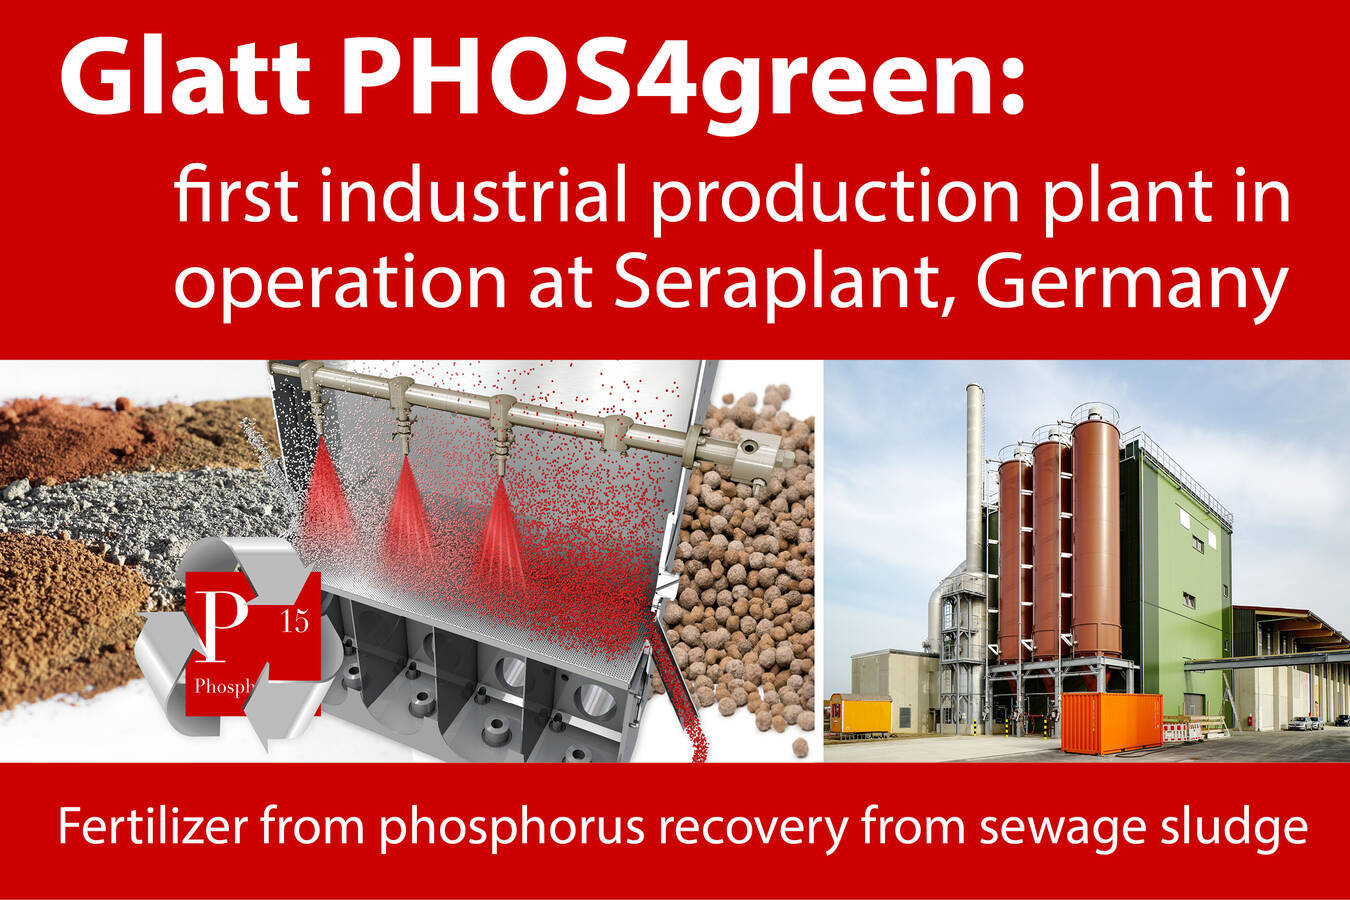 Glatt-PHOS4green, production start-up at Seraplant, Germany